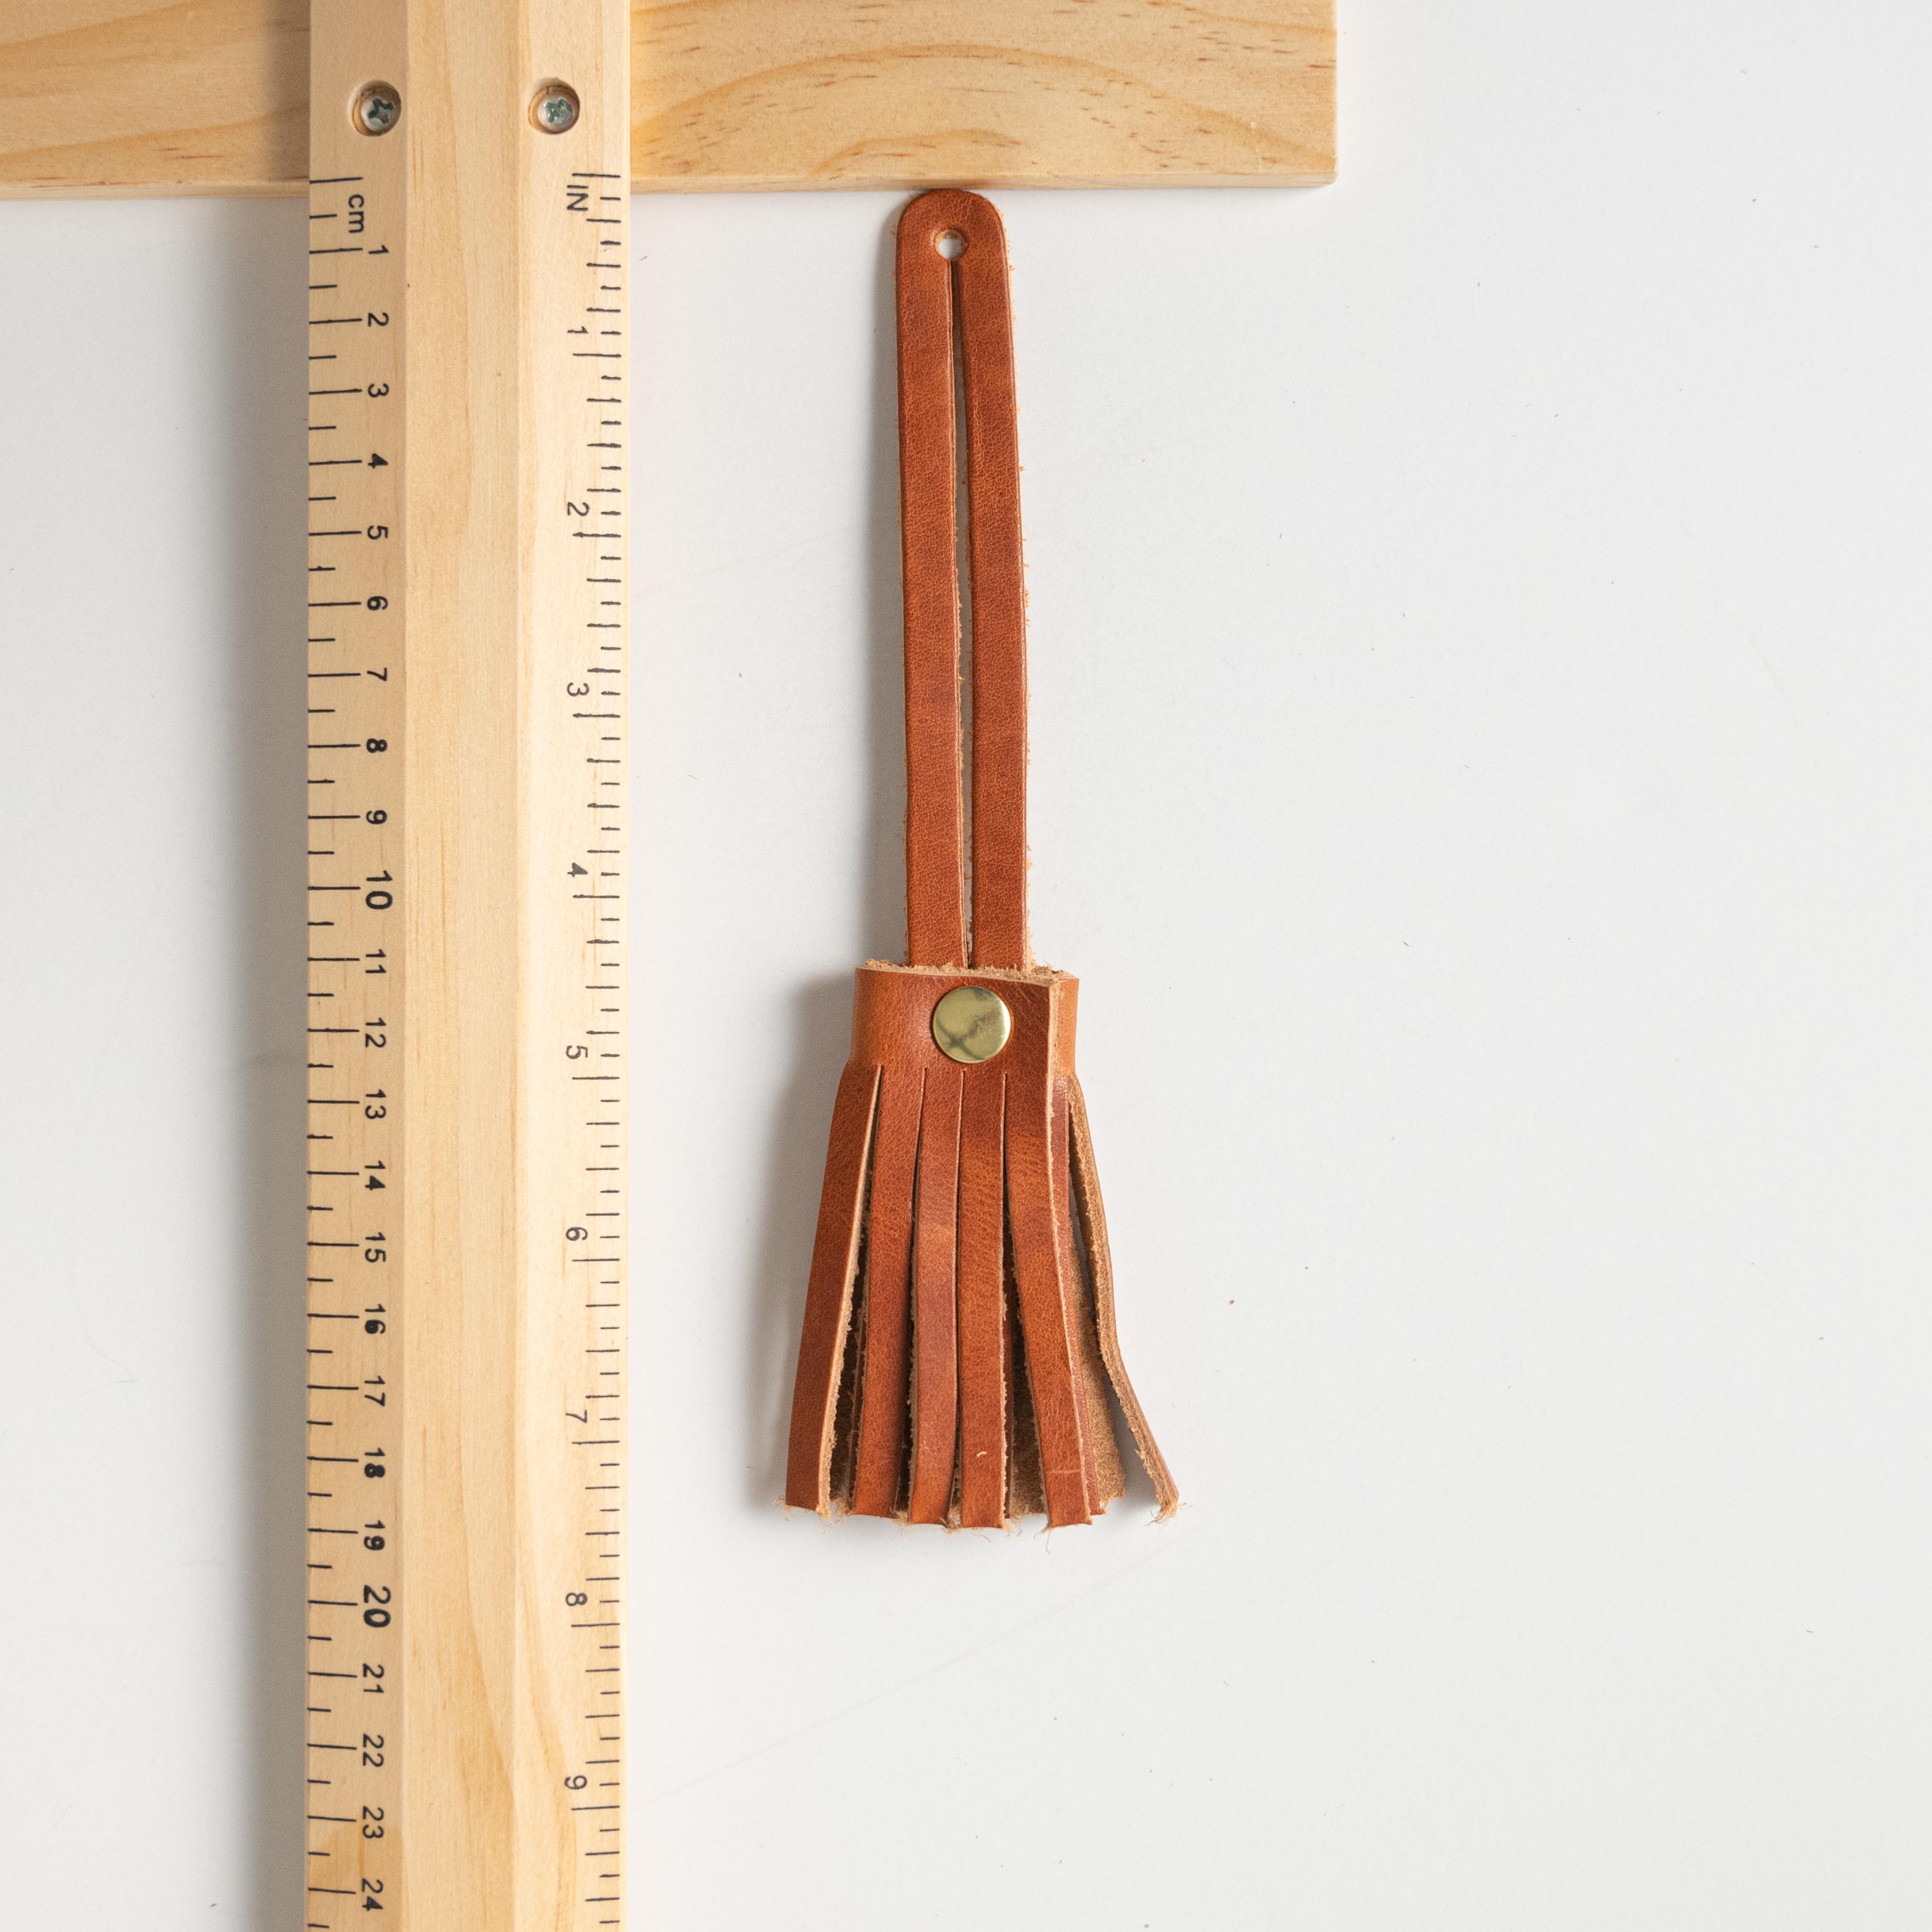 Leaf Cypress Mini Tassel- leather tassel keychain - KMM &amp; Co.